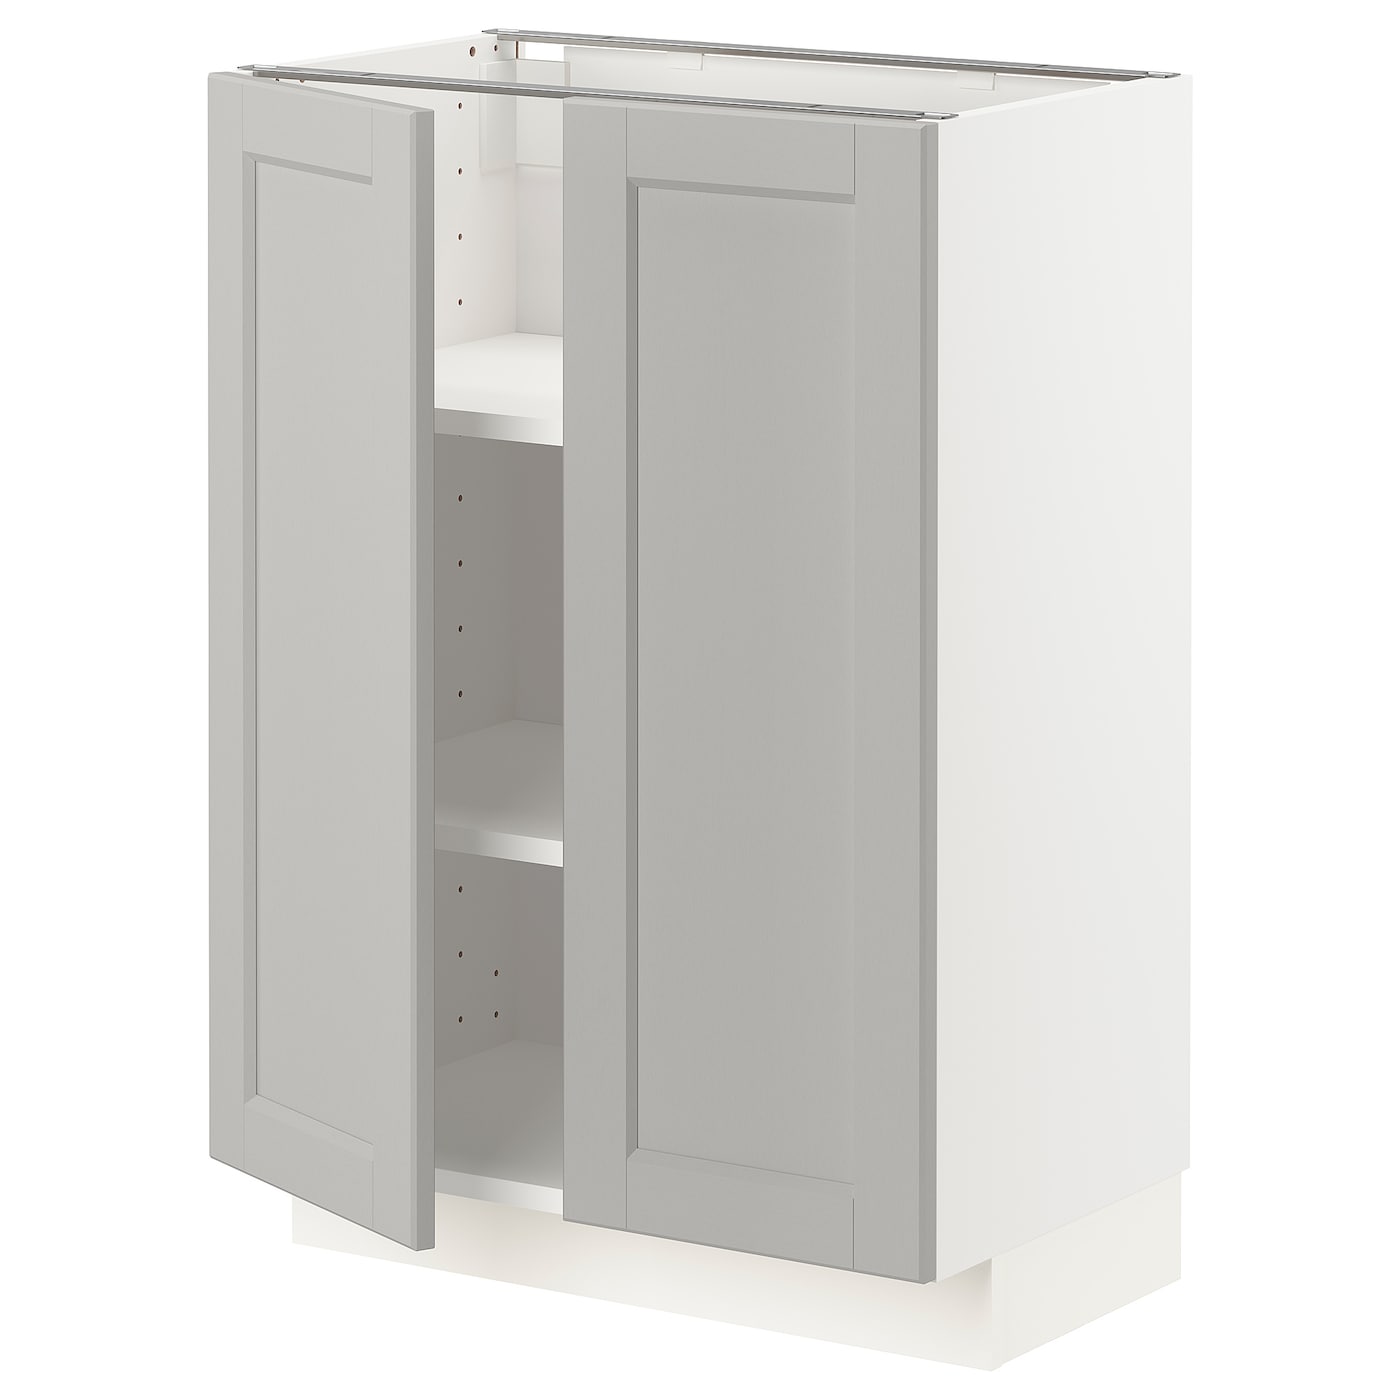 Напольный шкаф - METOD IKEA/ МЕТОД ИКЕА,  60х88 см, белый/серый